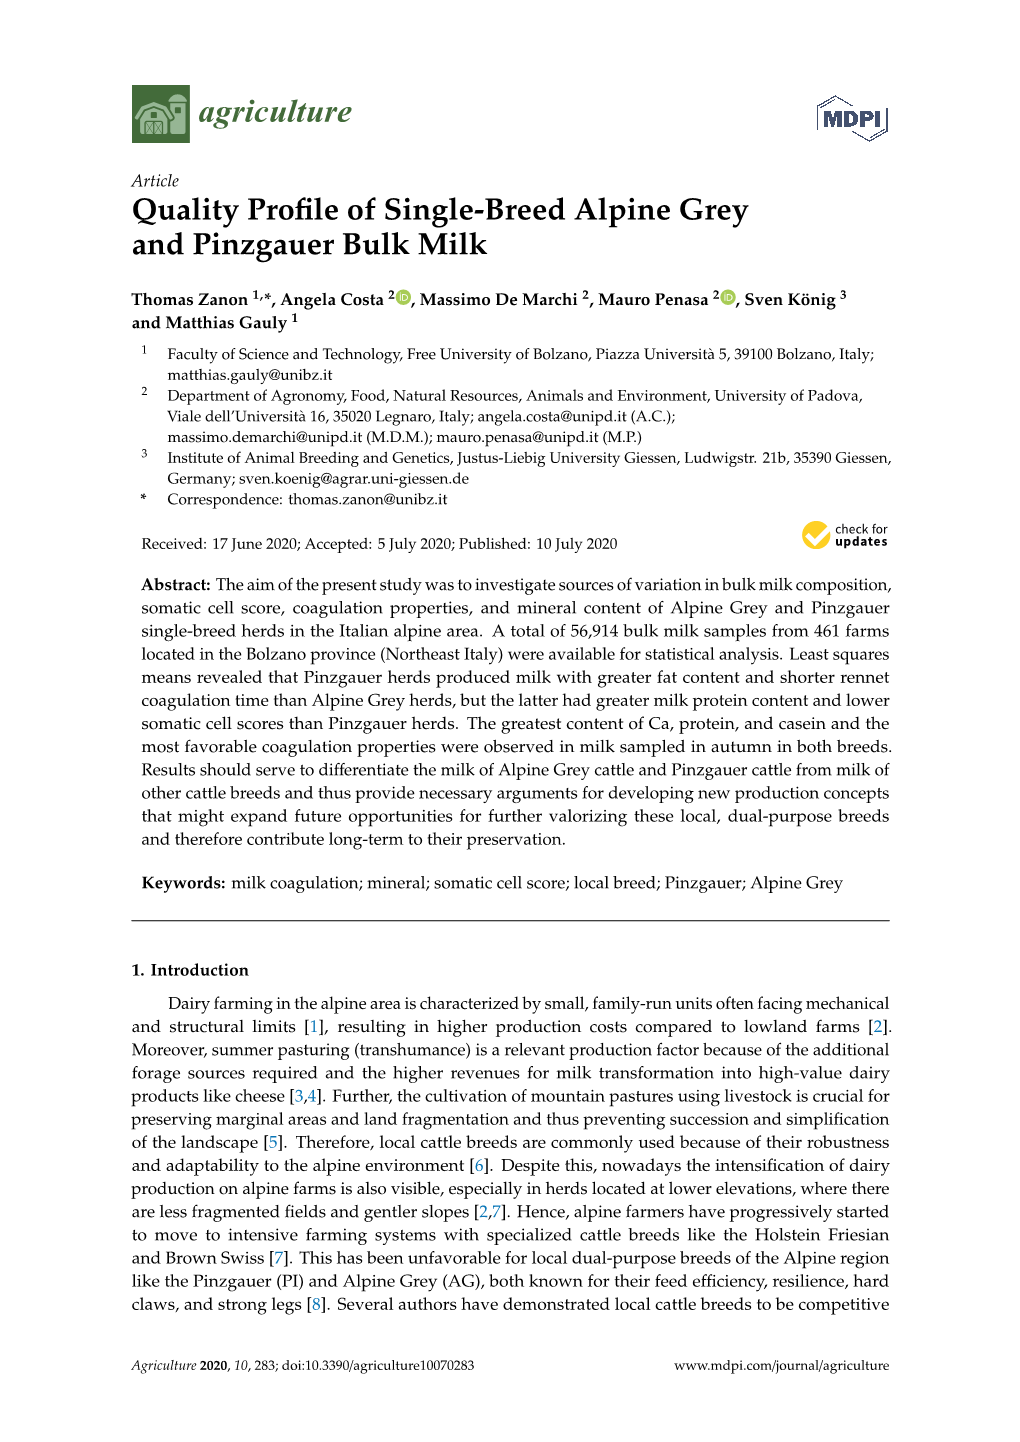 Quality Profile of Single-Breed Alpine Grey and Pinzgauer Bulk Milk